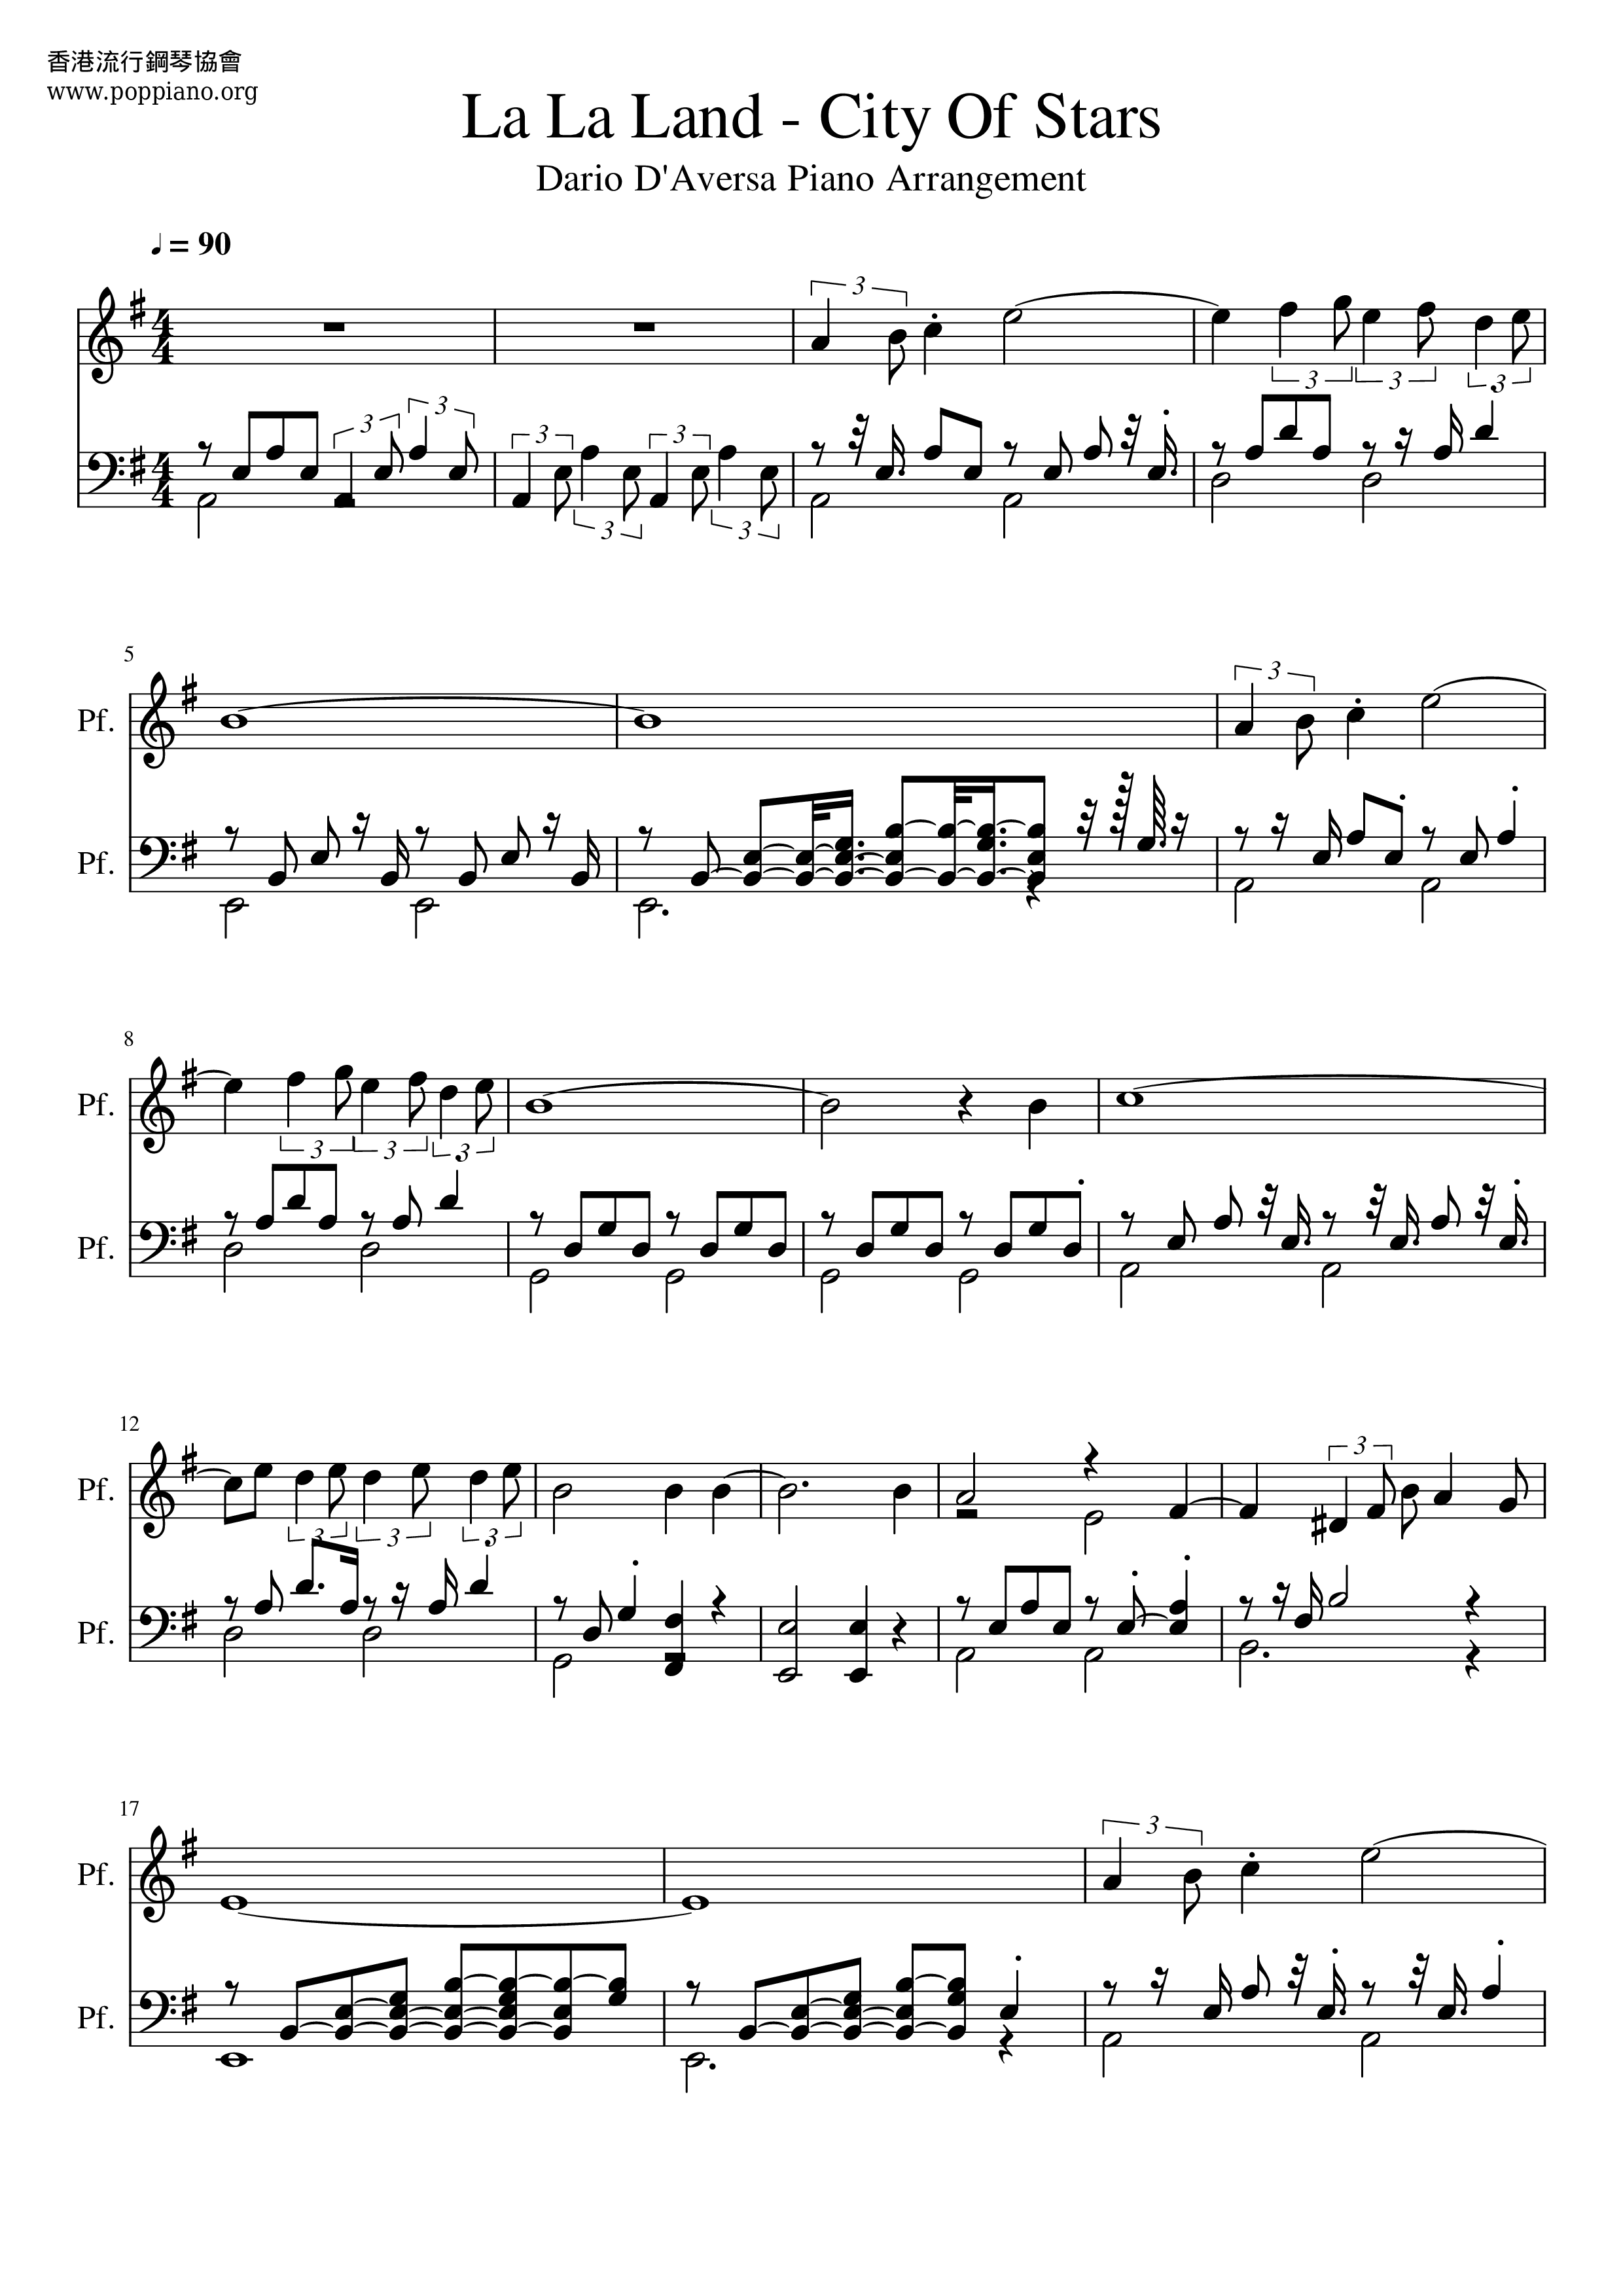 City of Stars (from La La Land) sheet music for accordion (PDF)